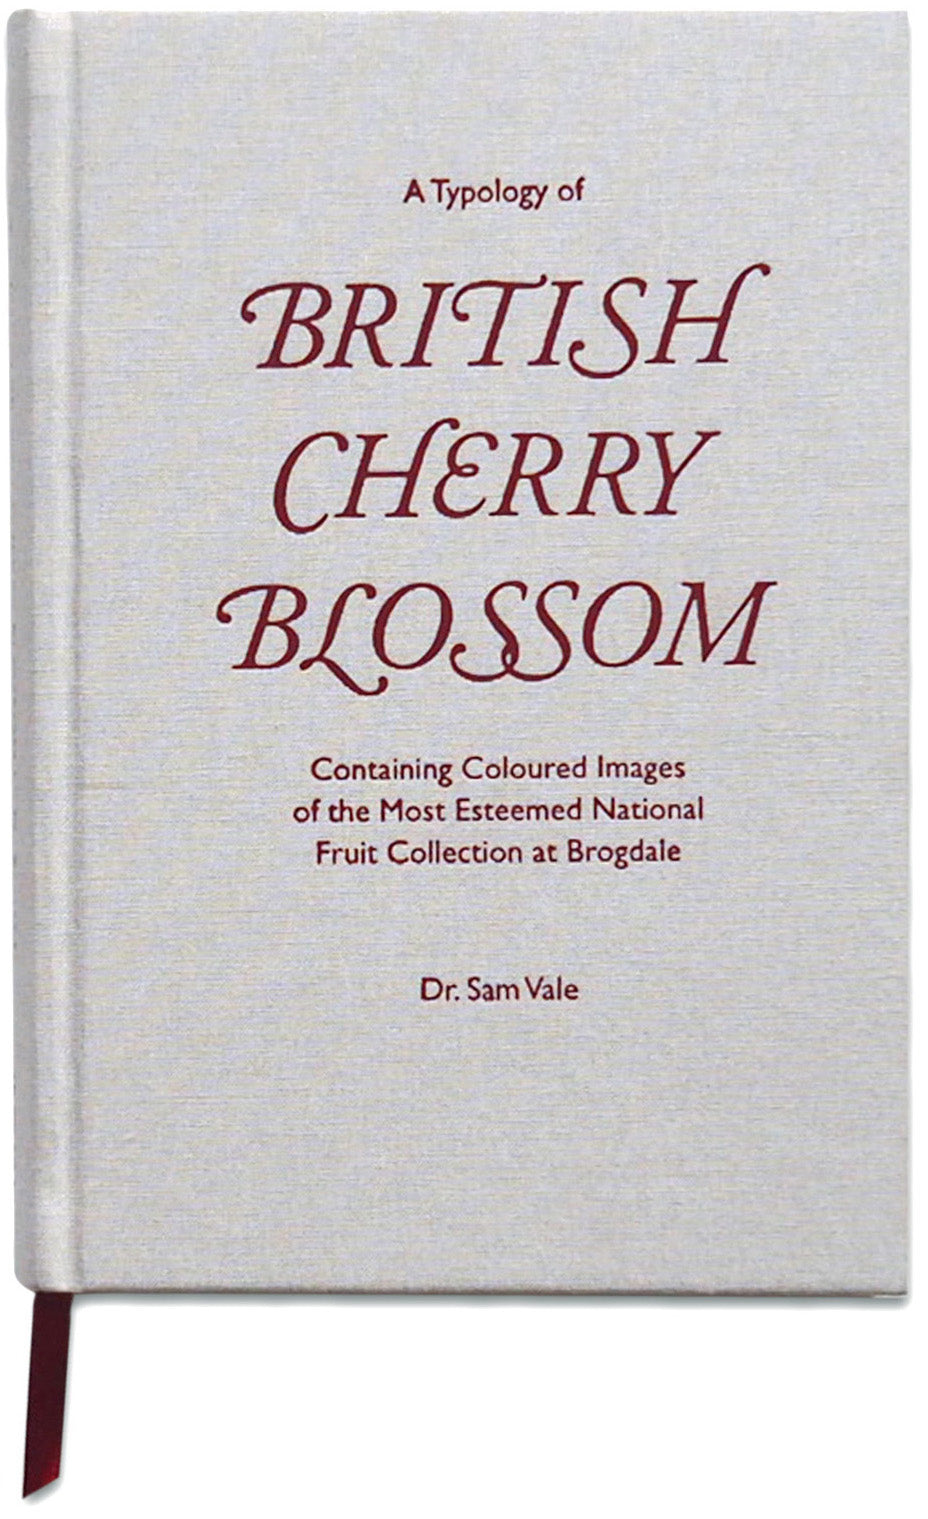 A Typology of British Cherry Blossom